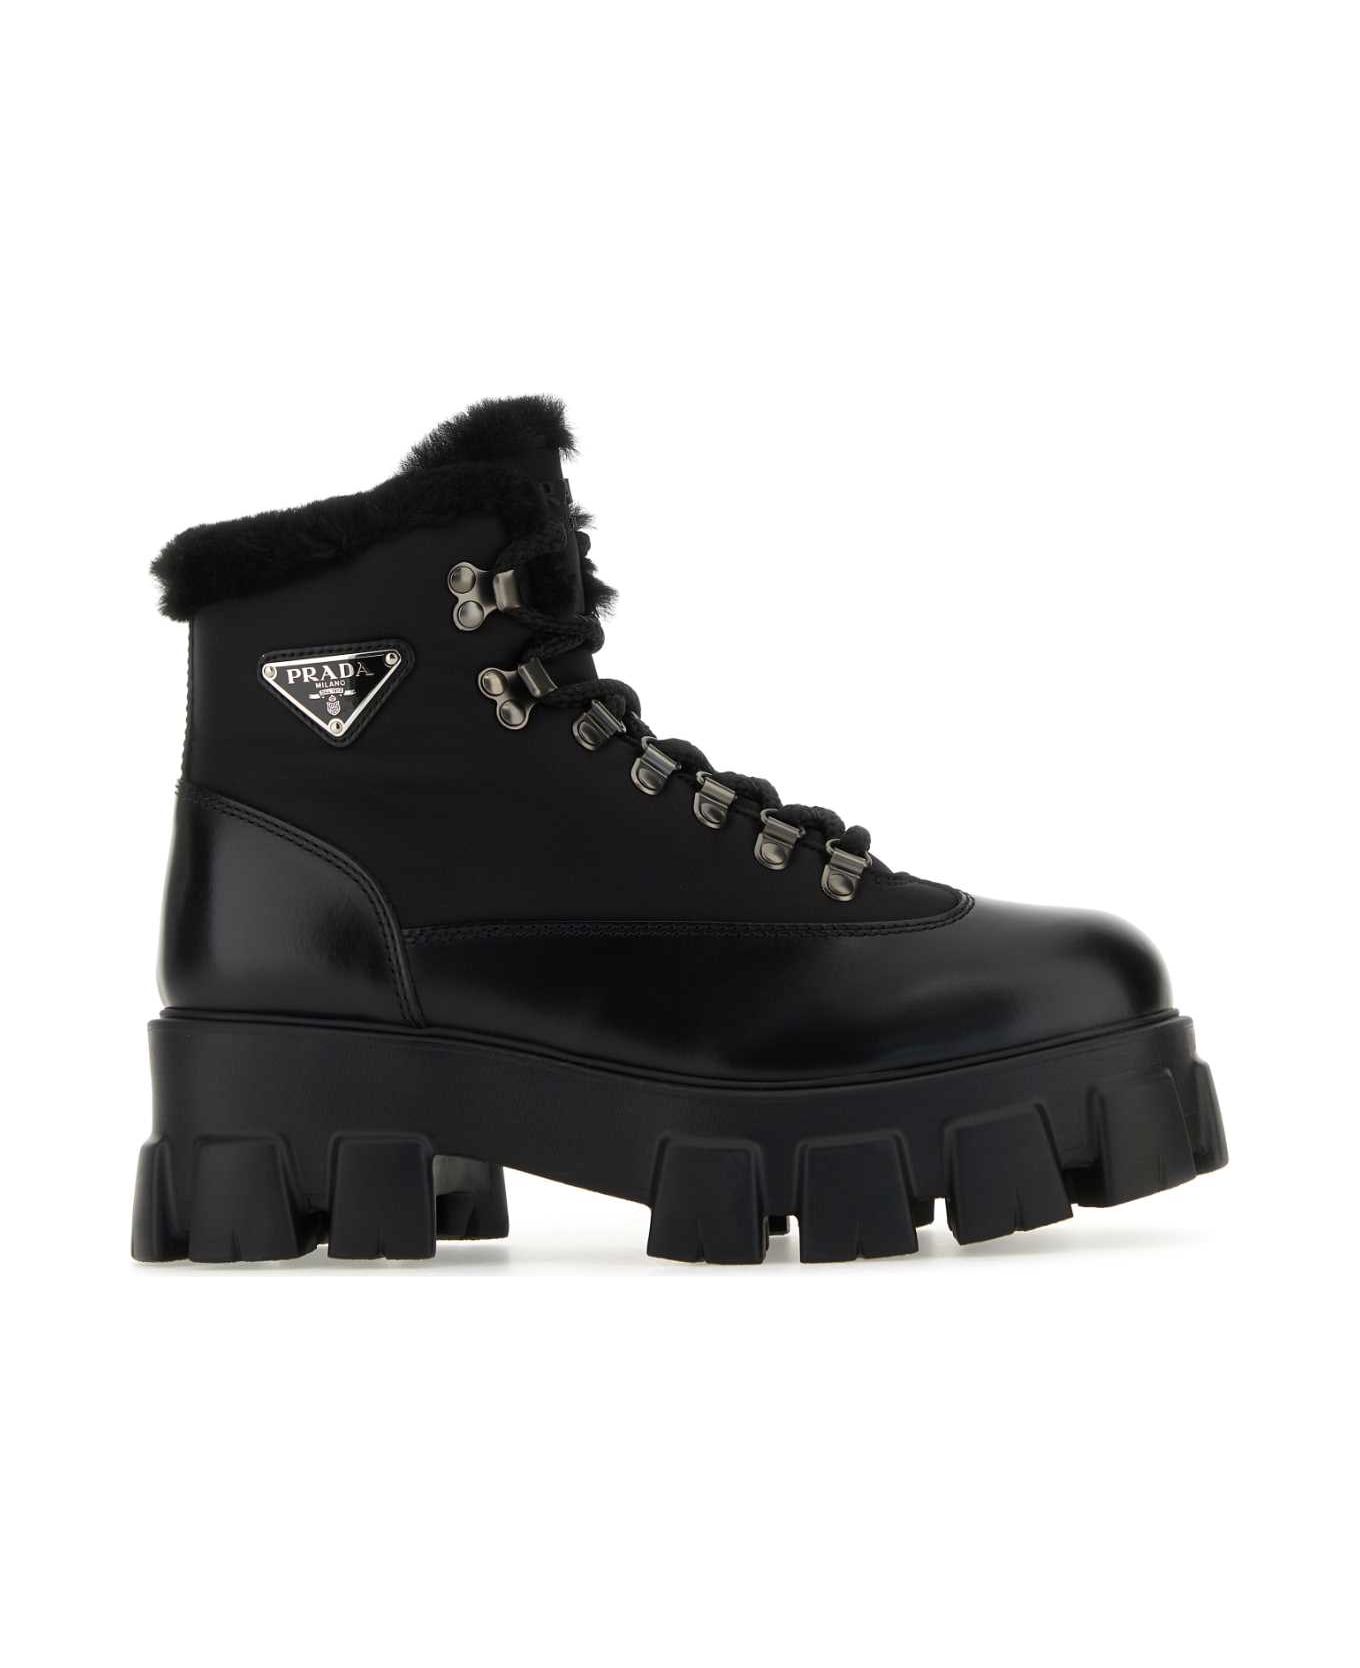 Prada Black Leather And Nylon Monolith Ankle Boots - NERO